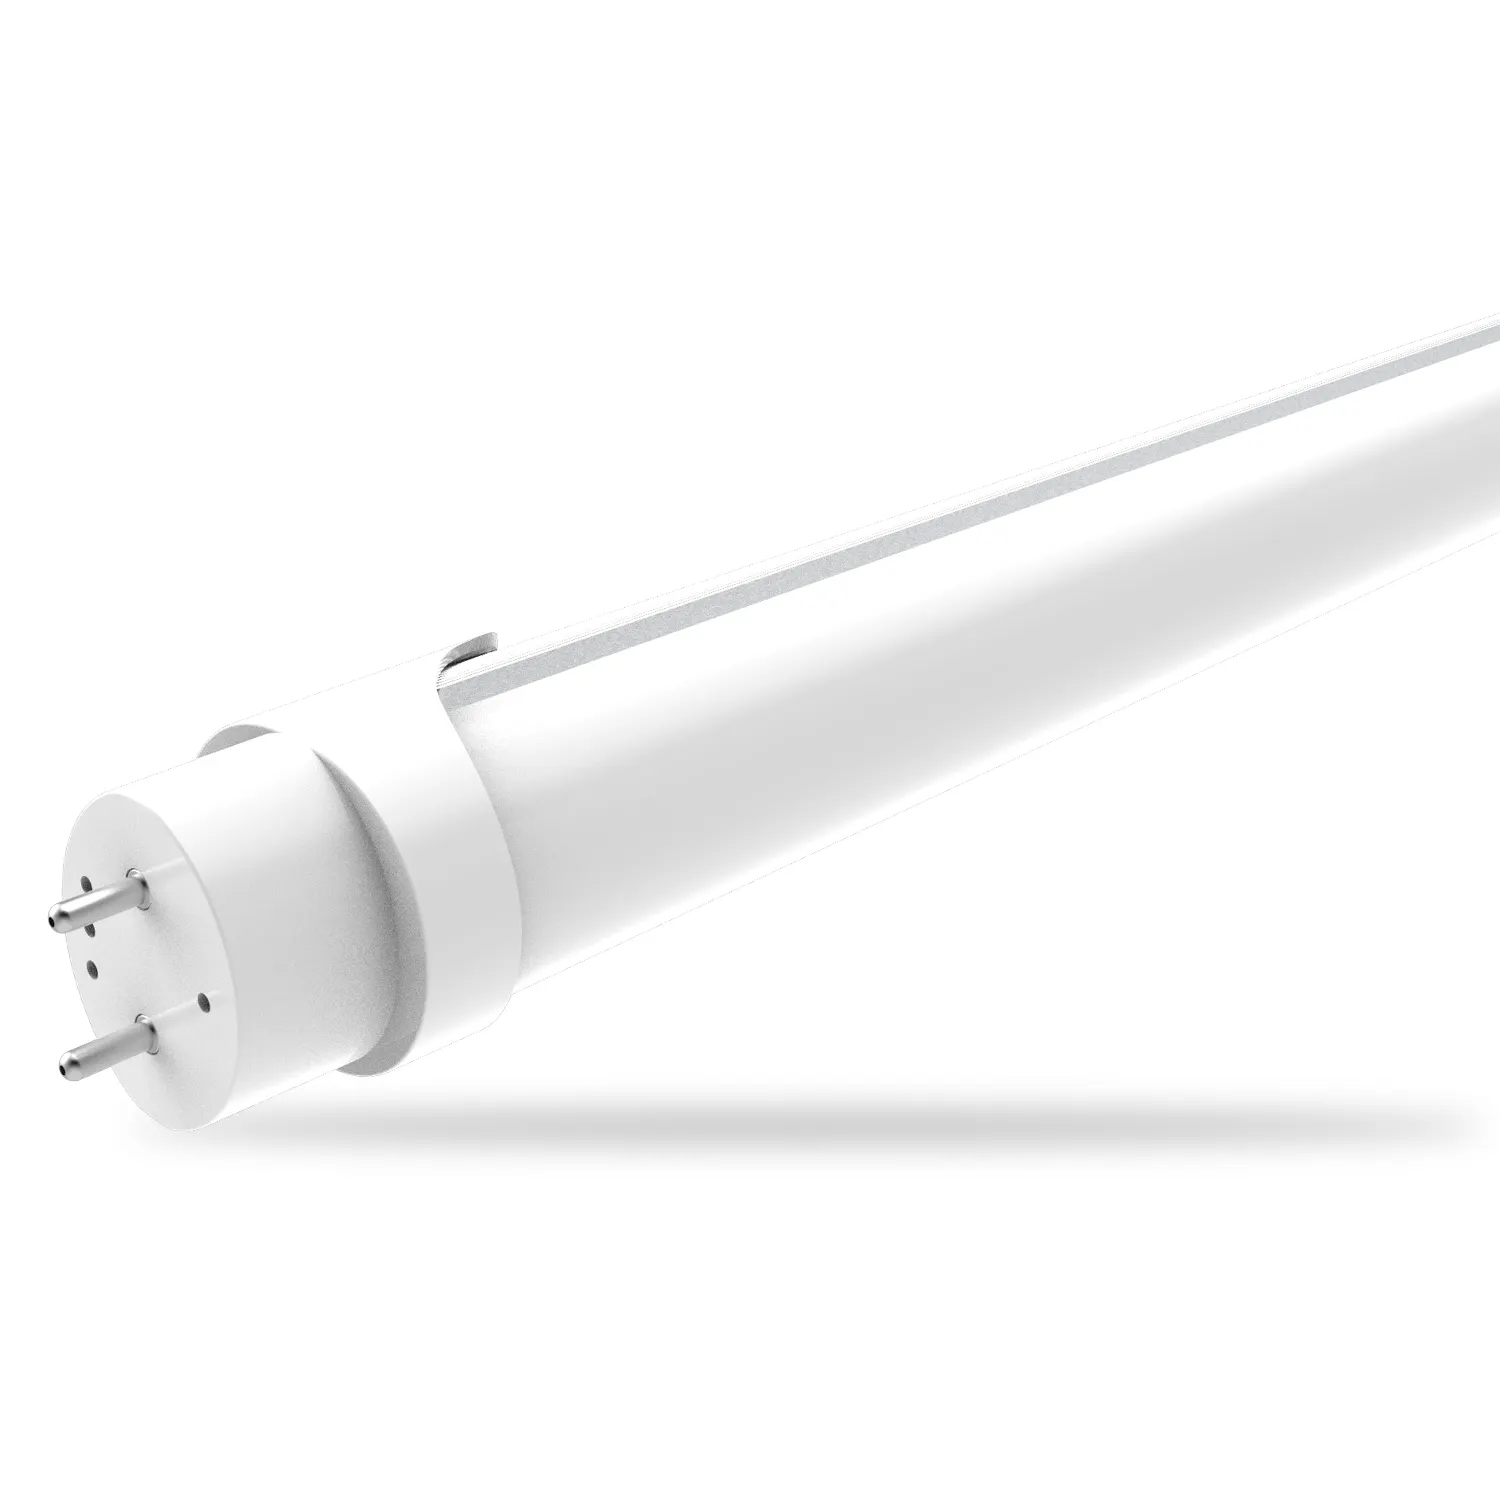 Banqcn t8 led tube light 6 color temperatures 5 powers customizable no stroboscopic high index energy saving high brightness